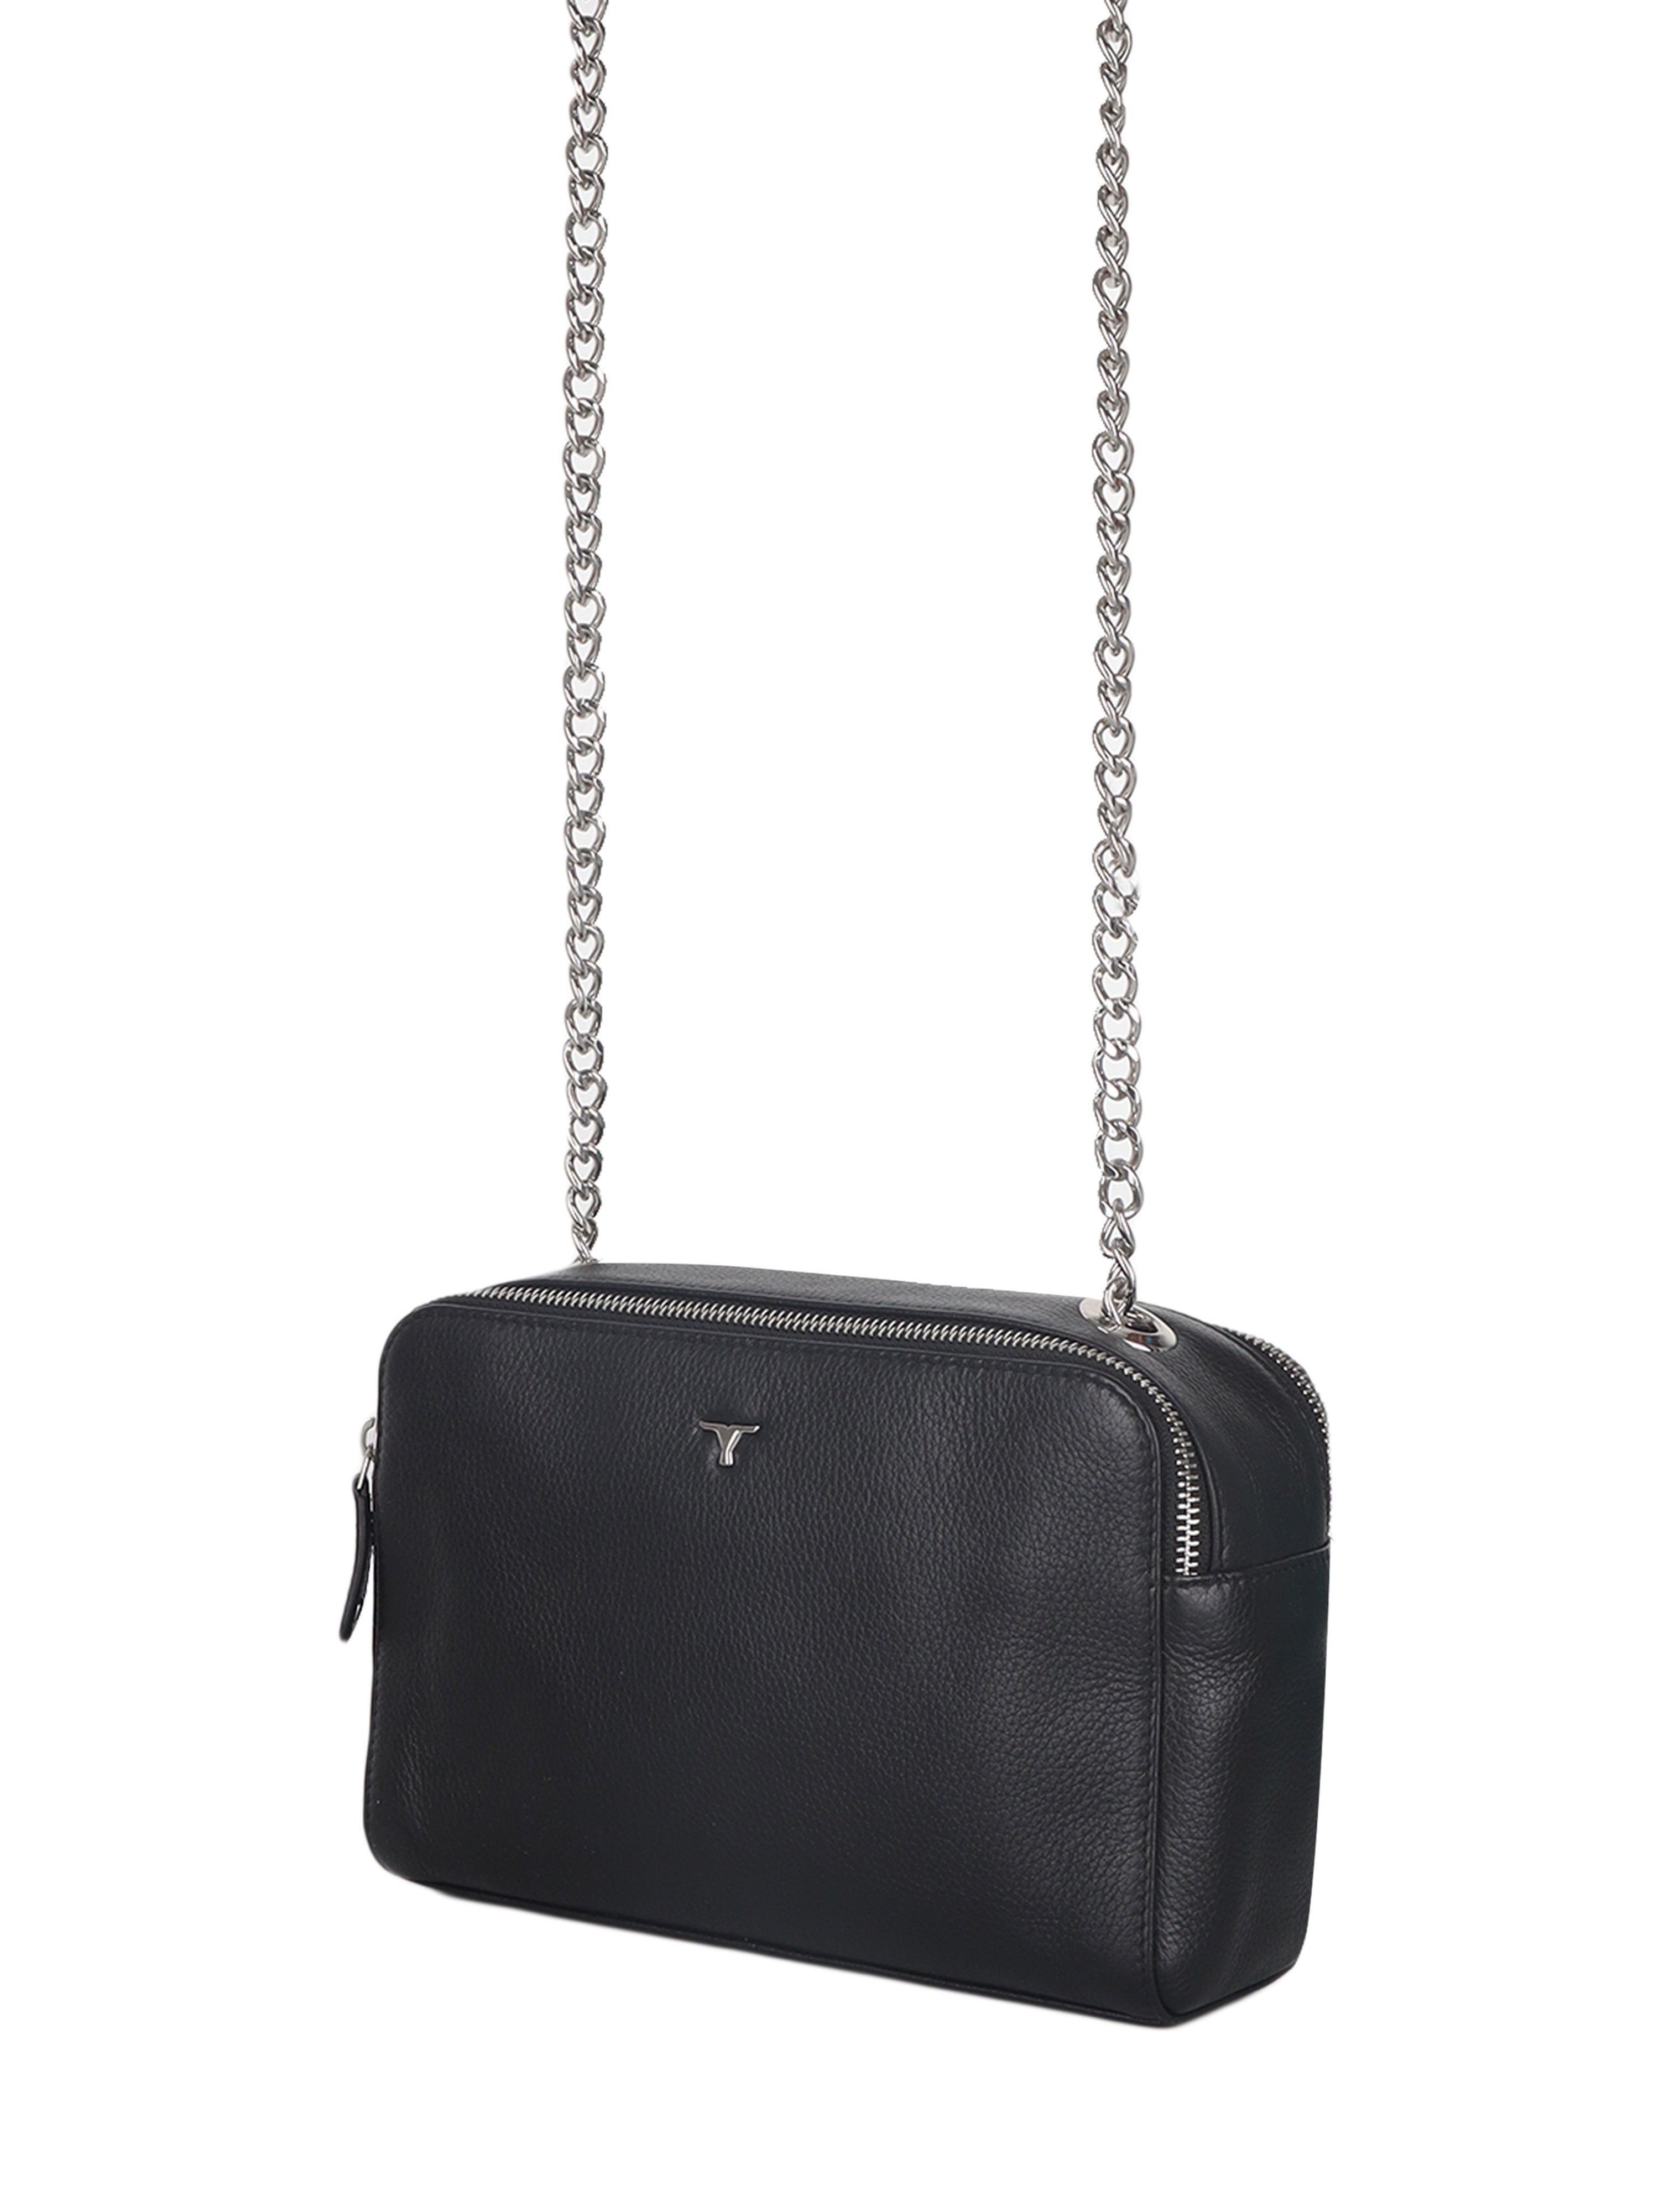 Bulchee Leather Crossbody Black Sling Bag - HBL2102.1